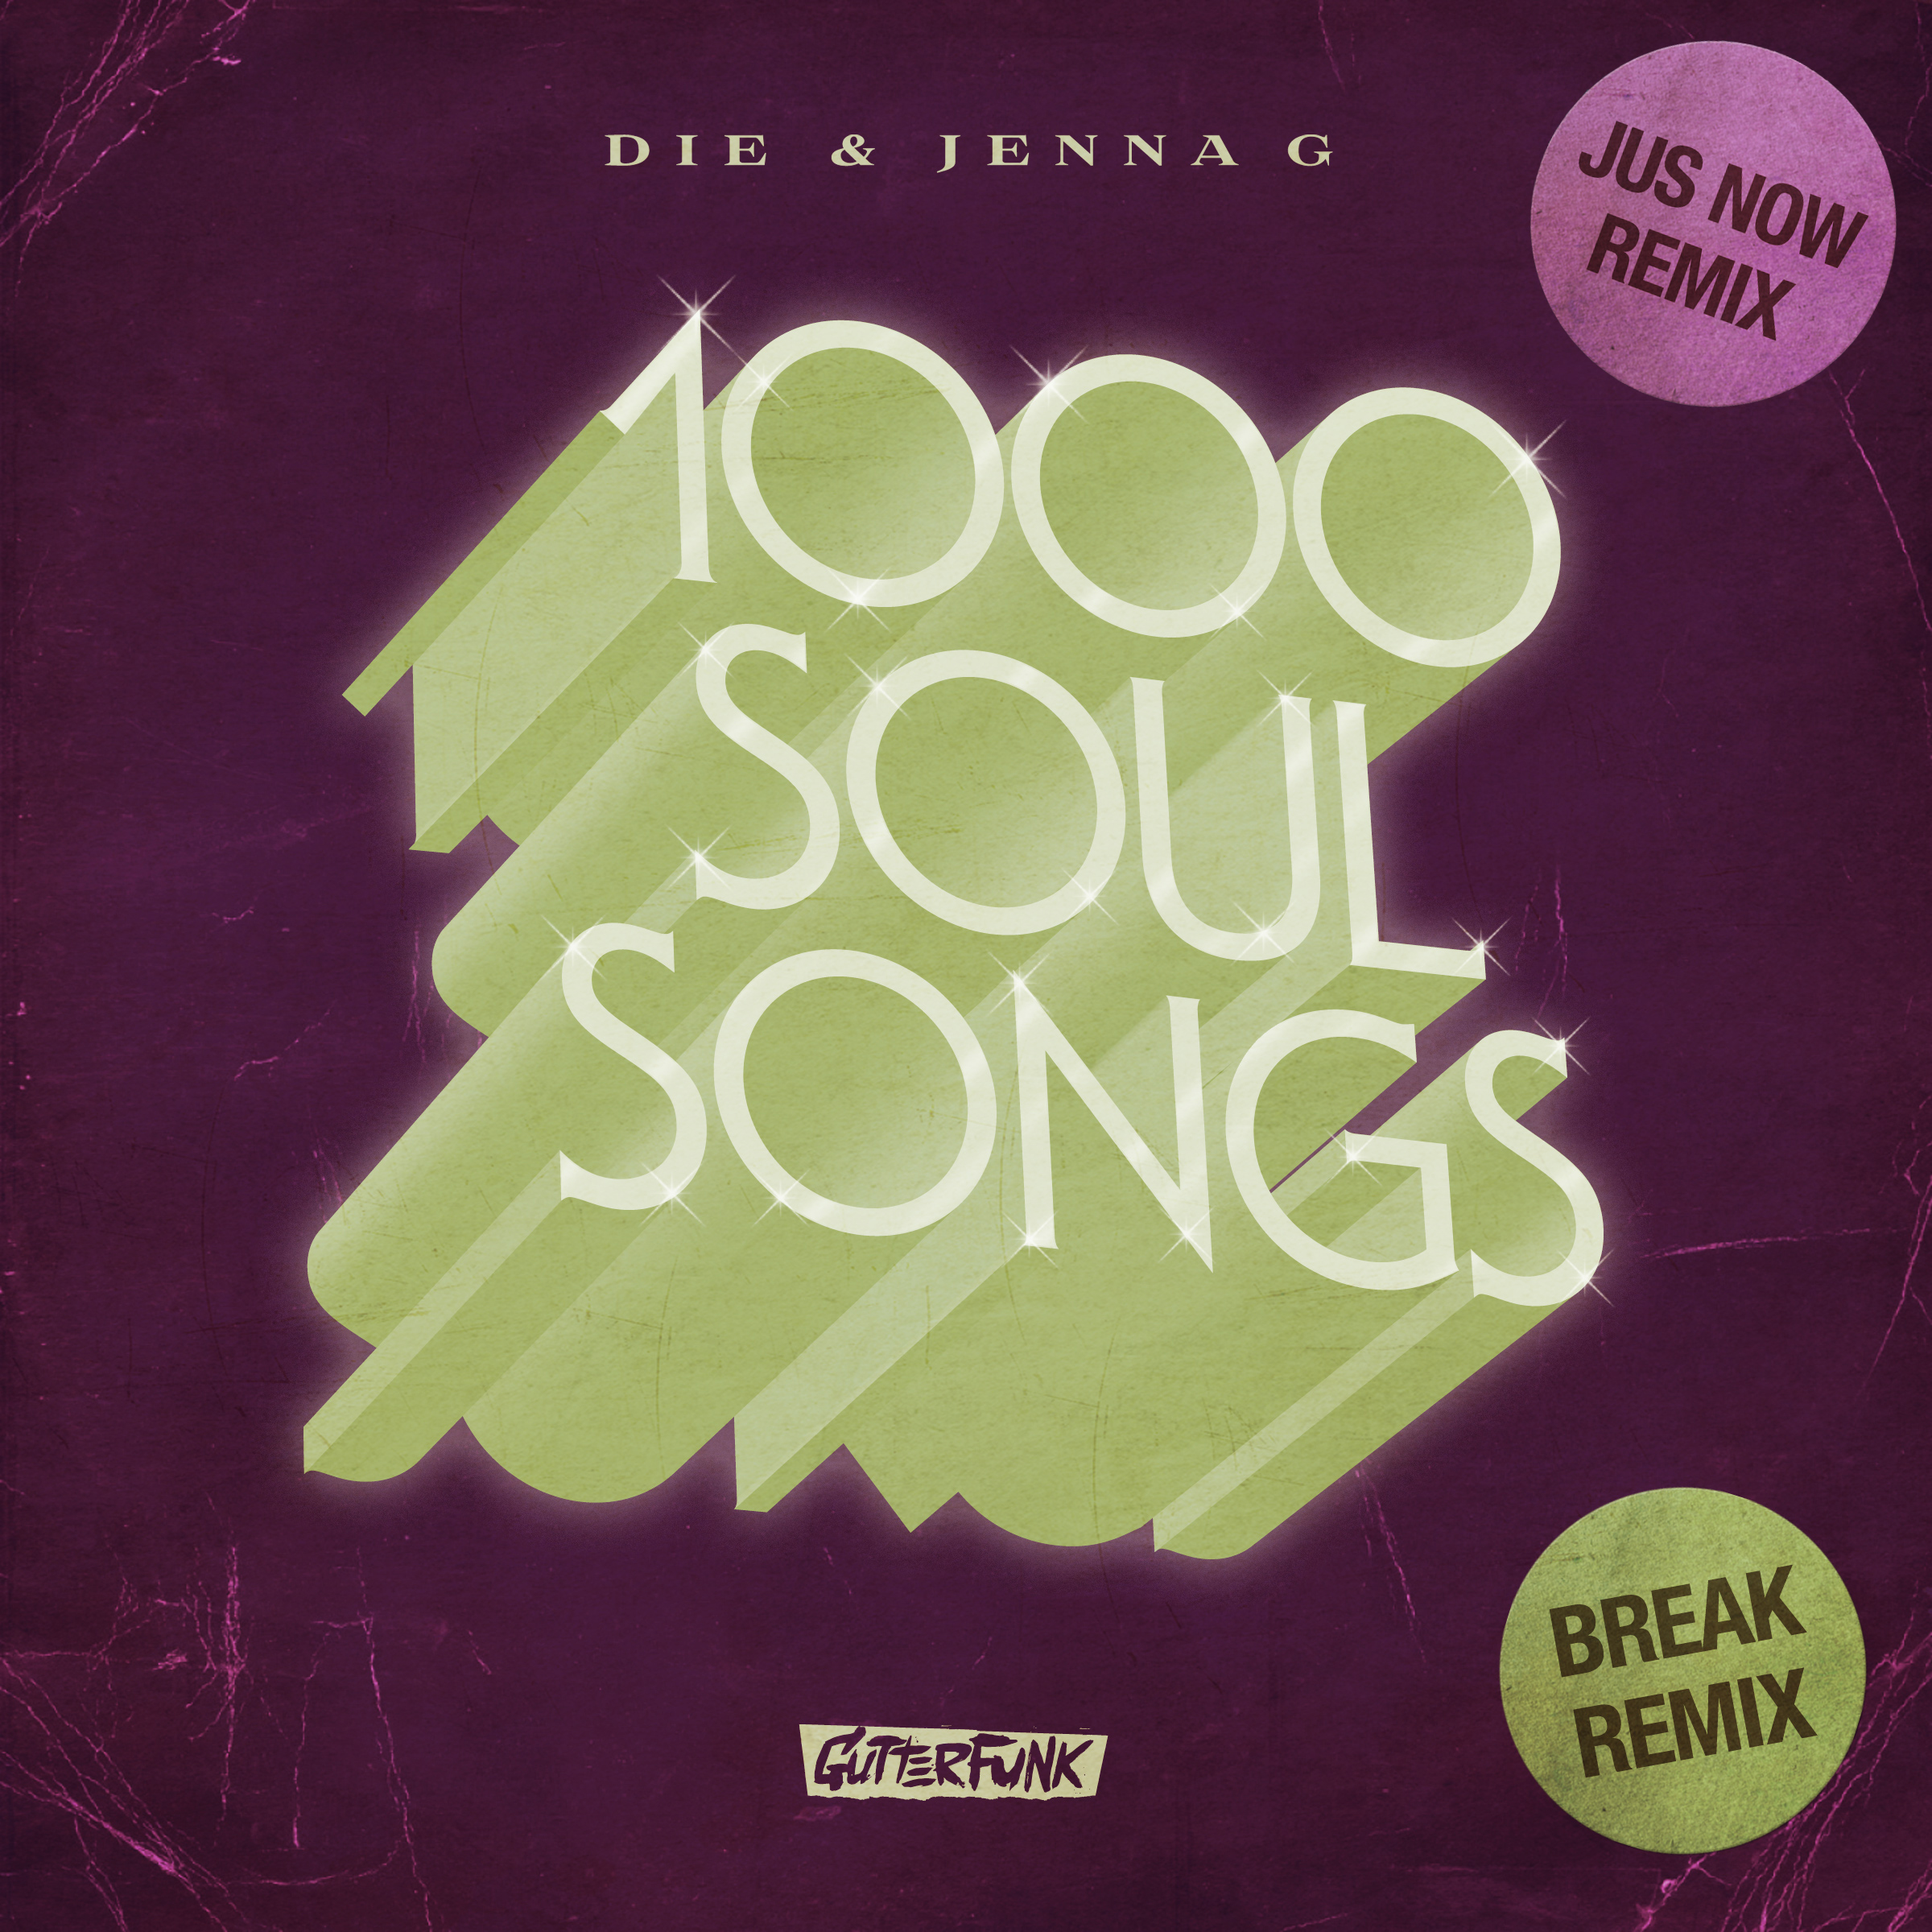 DJ Die & Jenna G/1000 SOUL SONG RMX 12"